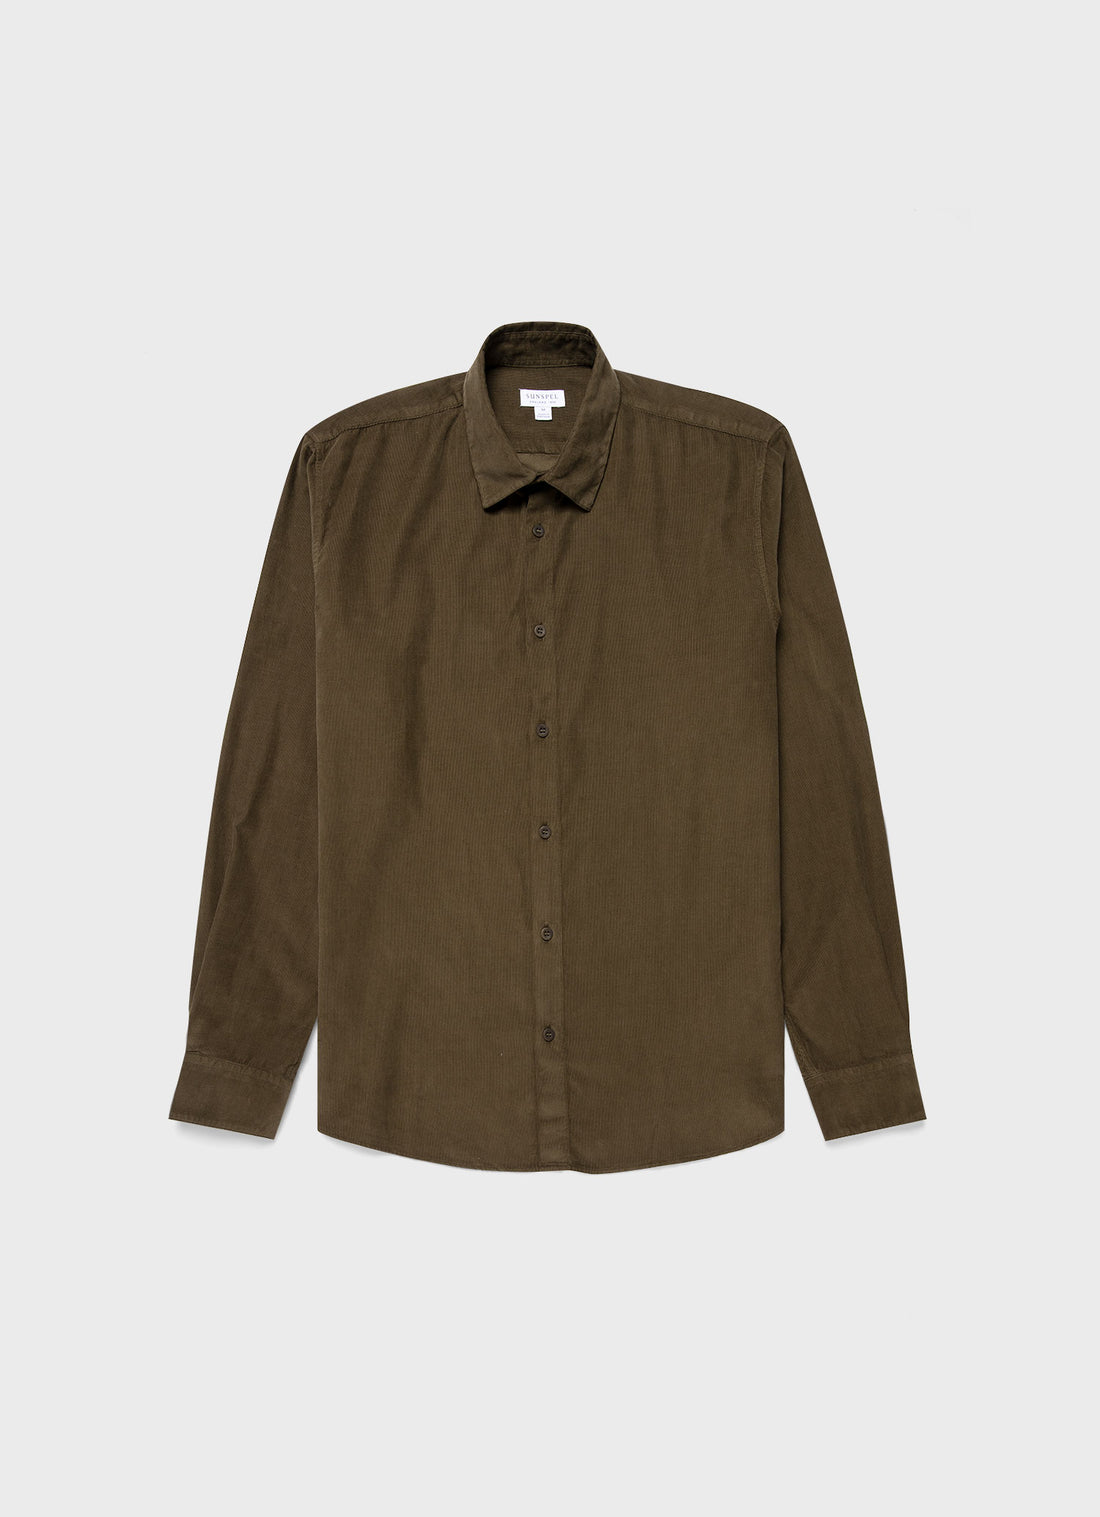 Men's Fine Cord Shirt in Dark Moss